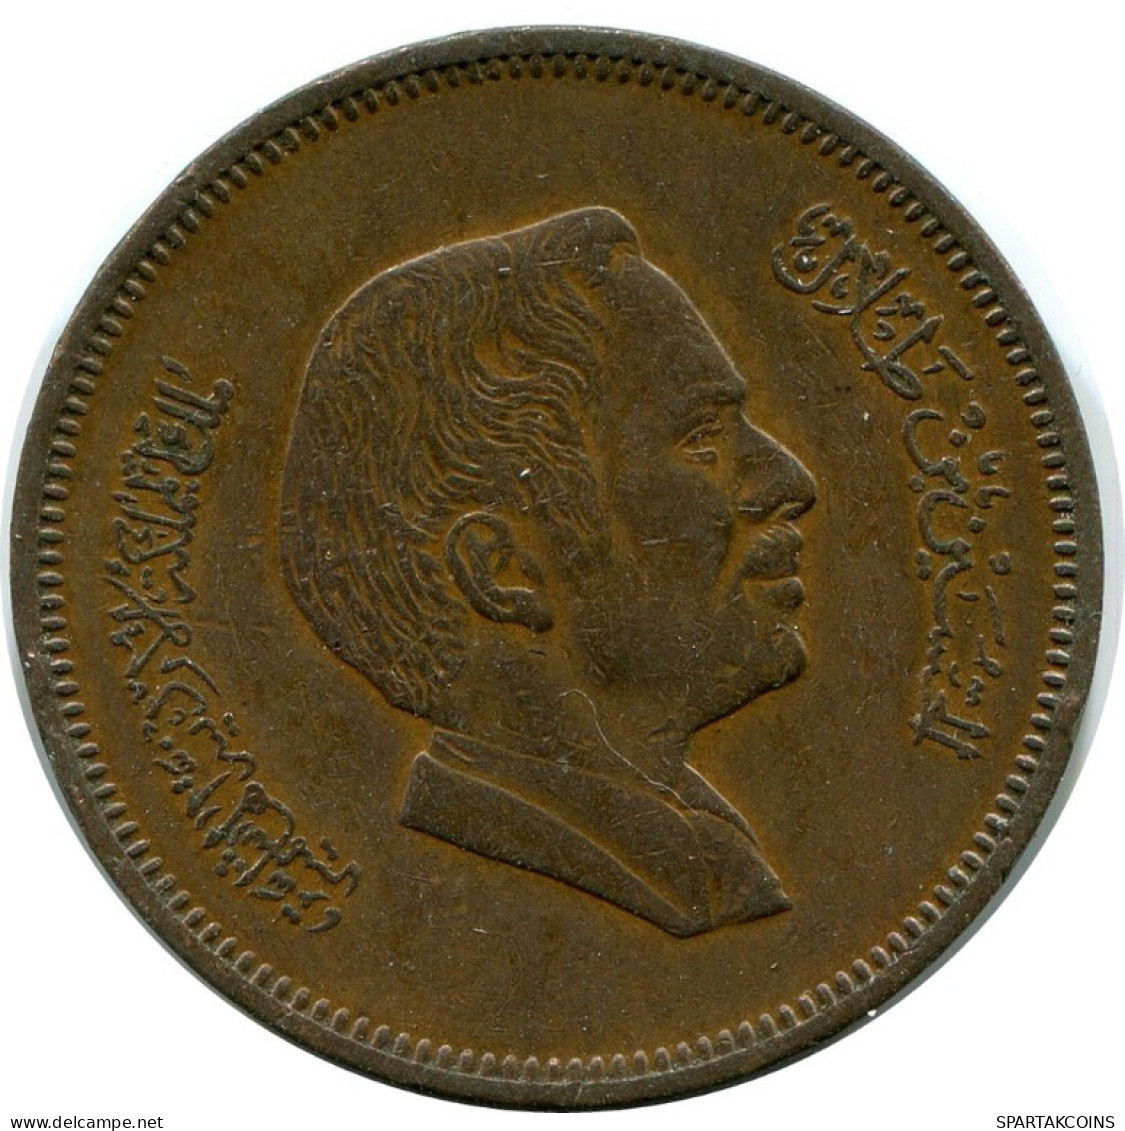 10 FILS 1398-1978 JORDAN Islamic Coin #AK148.U.A - Jordanië